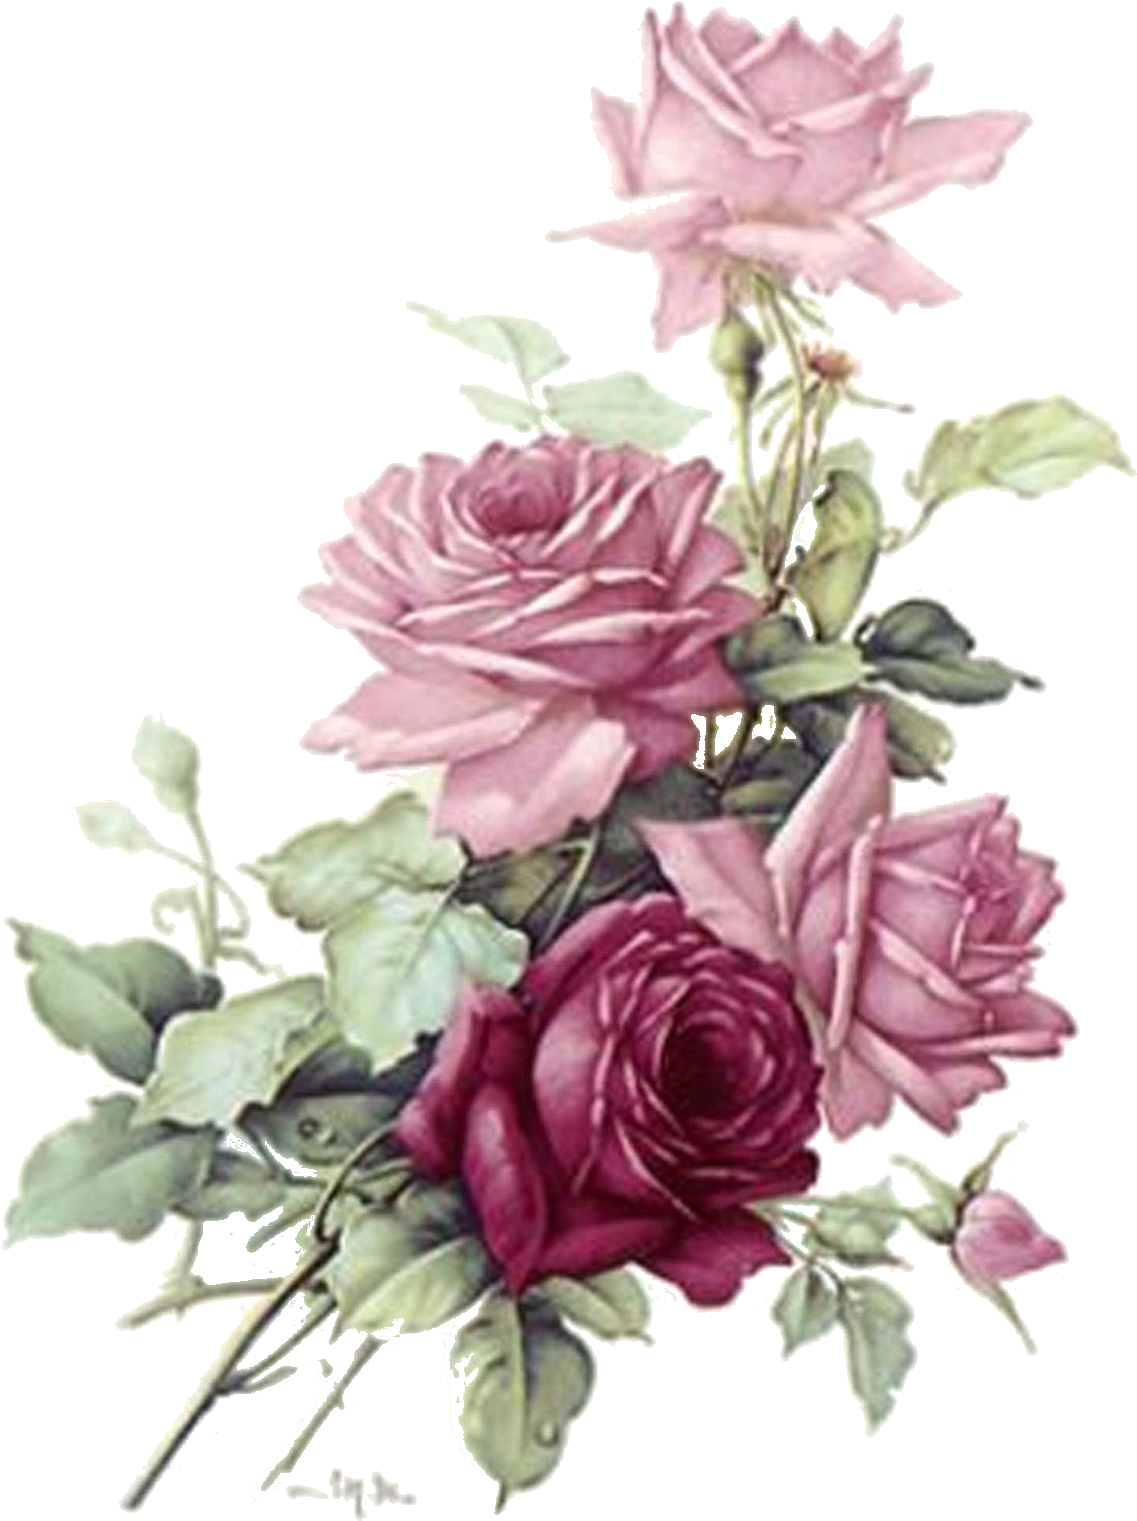 Vintage Pink Roses Bouquet PNG image